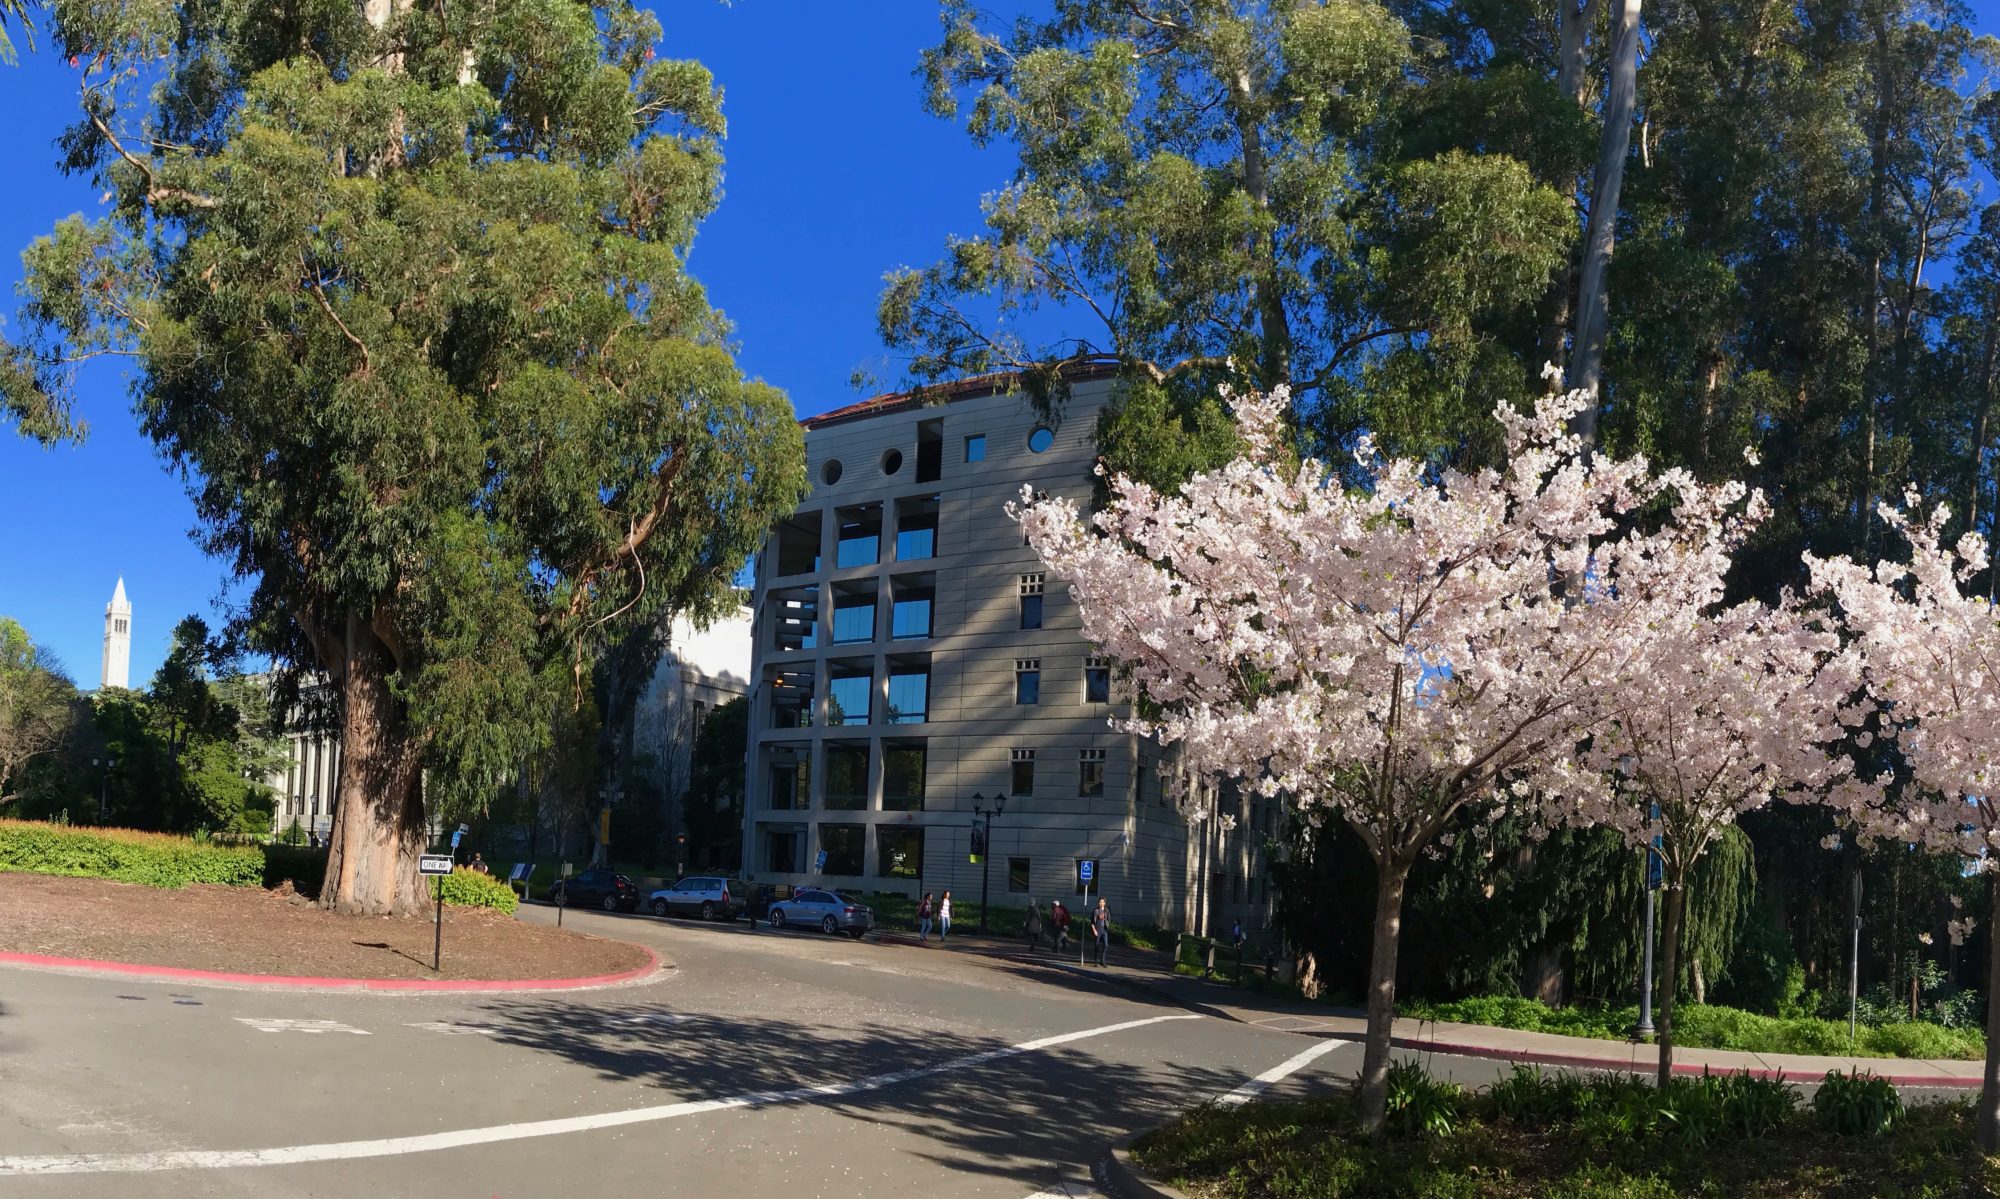 Vance Lab at UC Berkeley